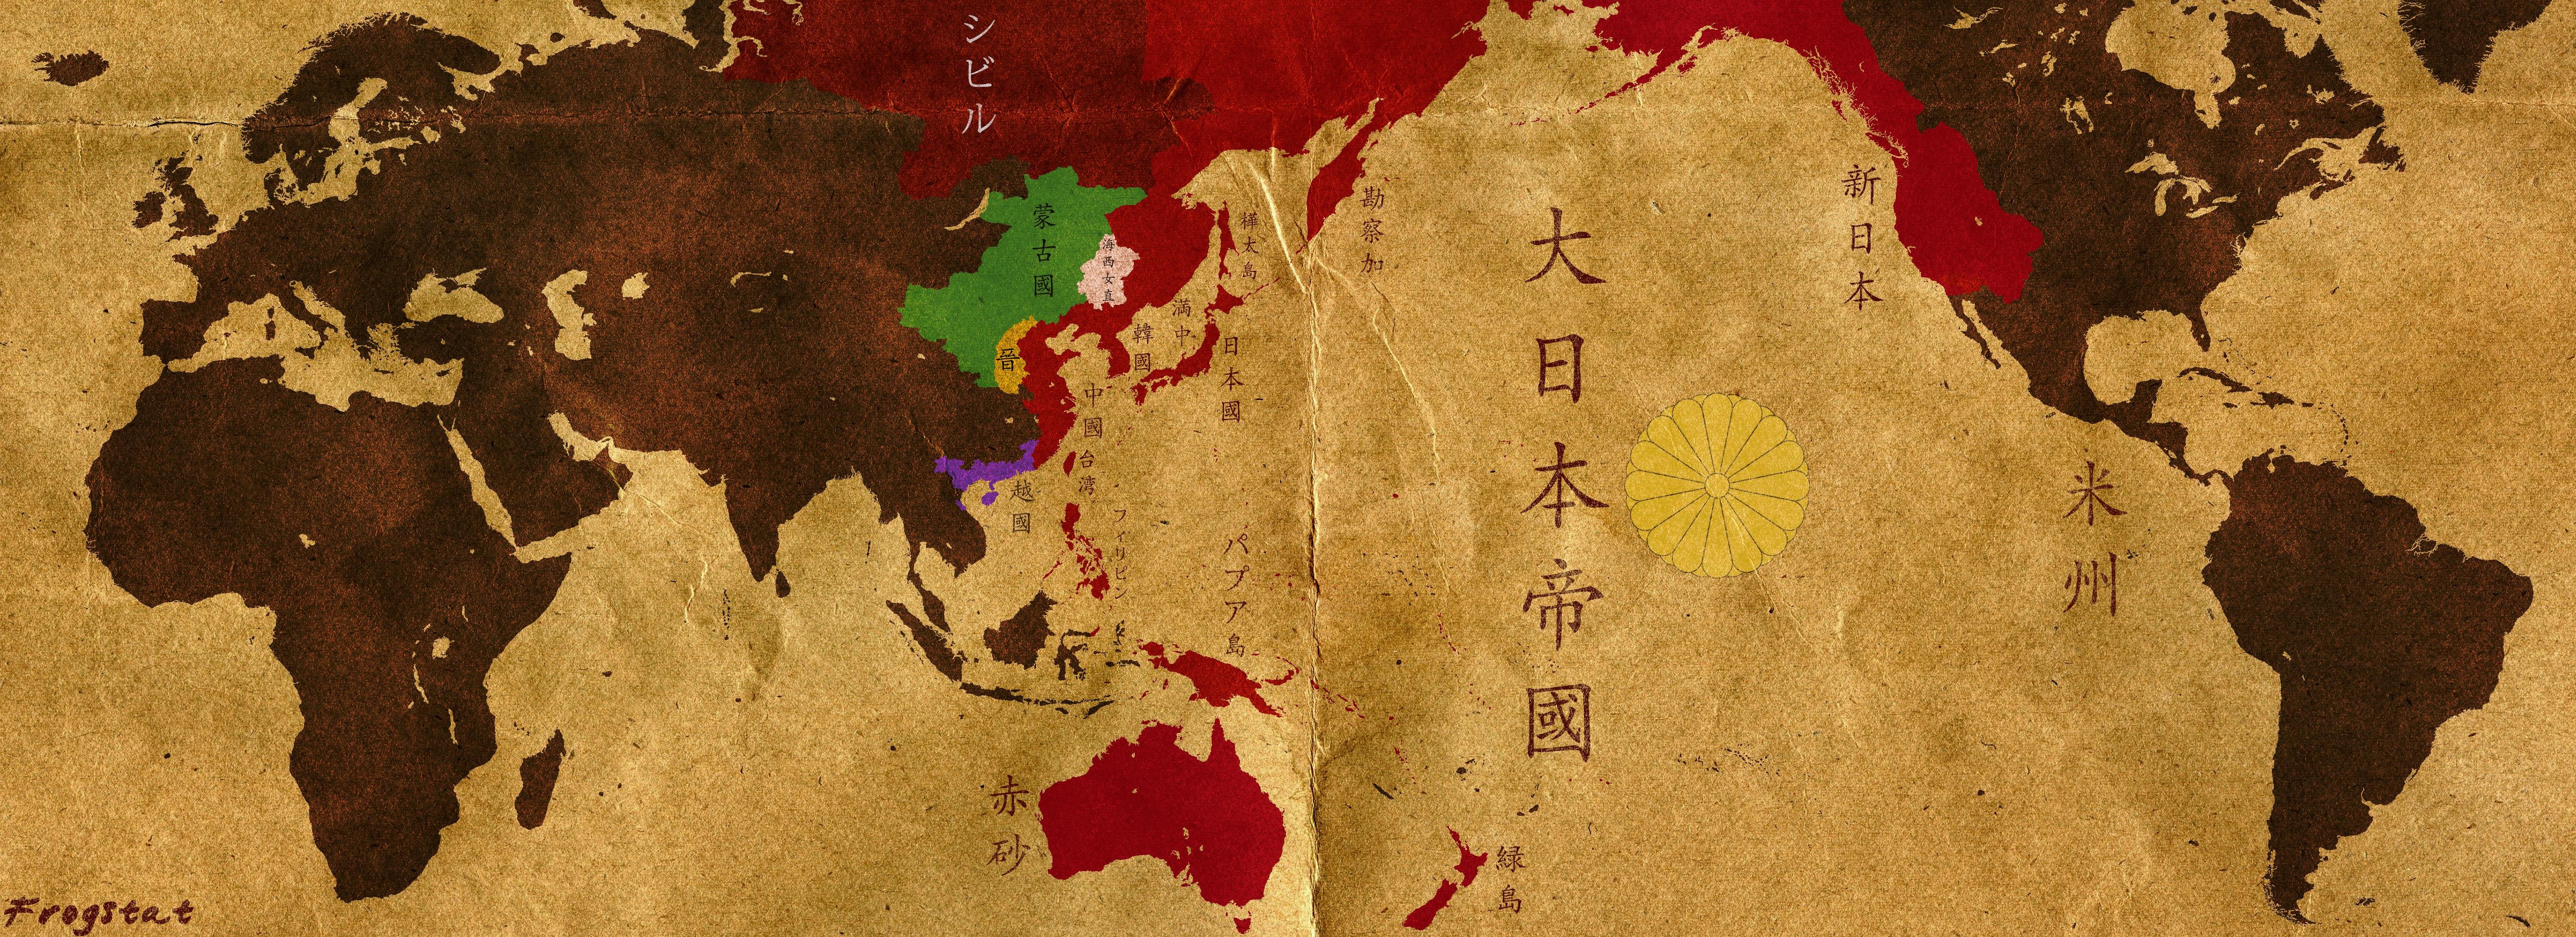 Японская Империя 1938. Японская Империя 1936. Японская Империя и китайская Империя. Японская Империя Хирохито на карте. Экспансия японии